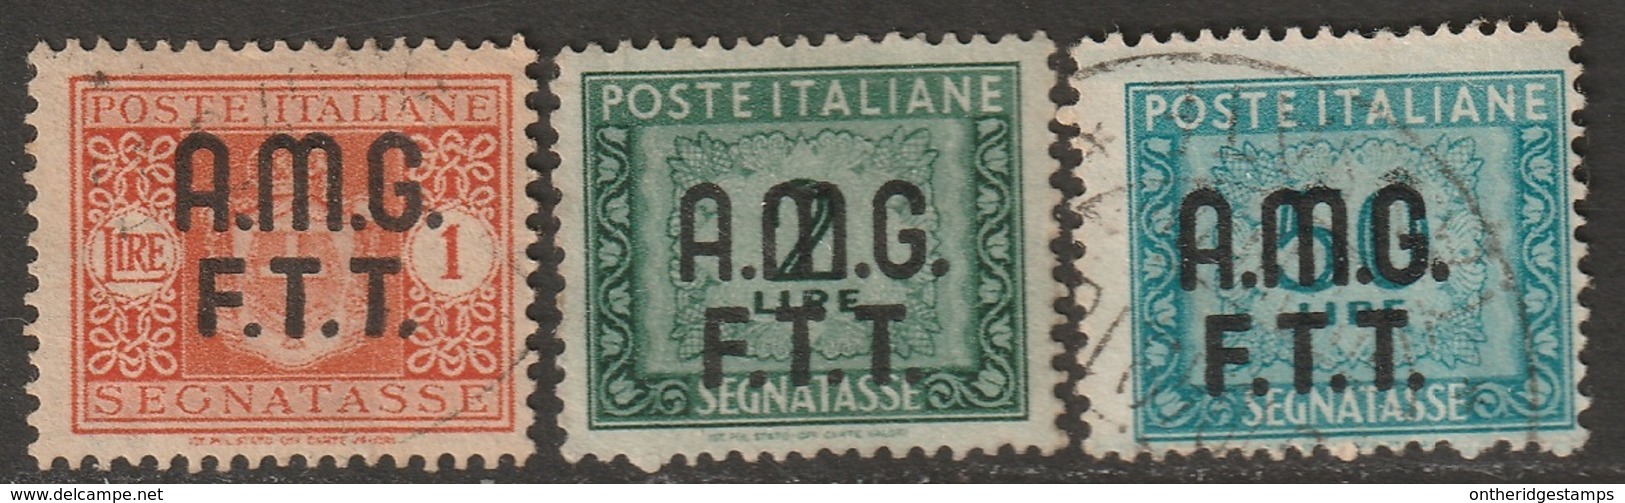 Trieste Zone A 1947 Sc J1-2,J6  Postage Due Used - Segnatasse